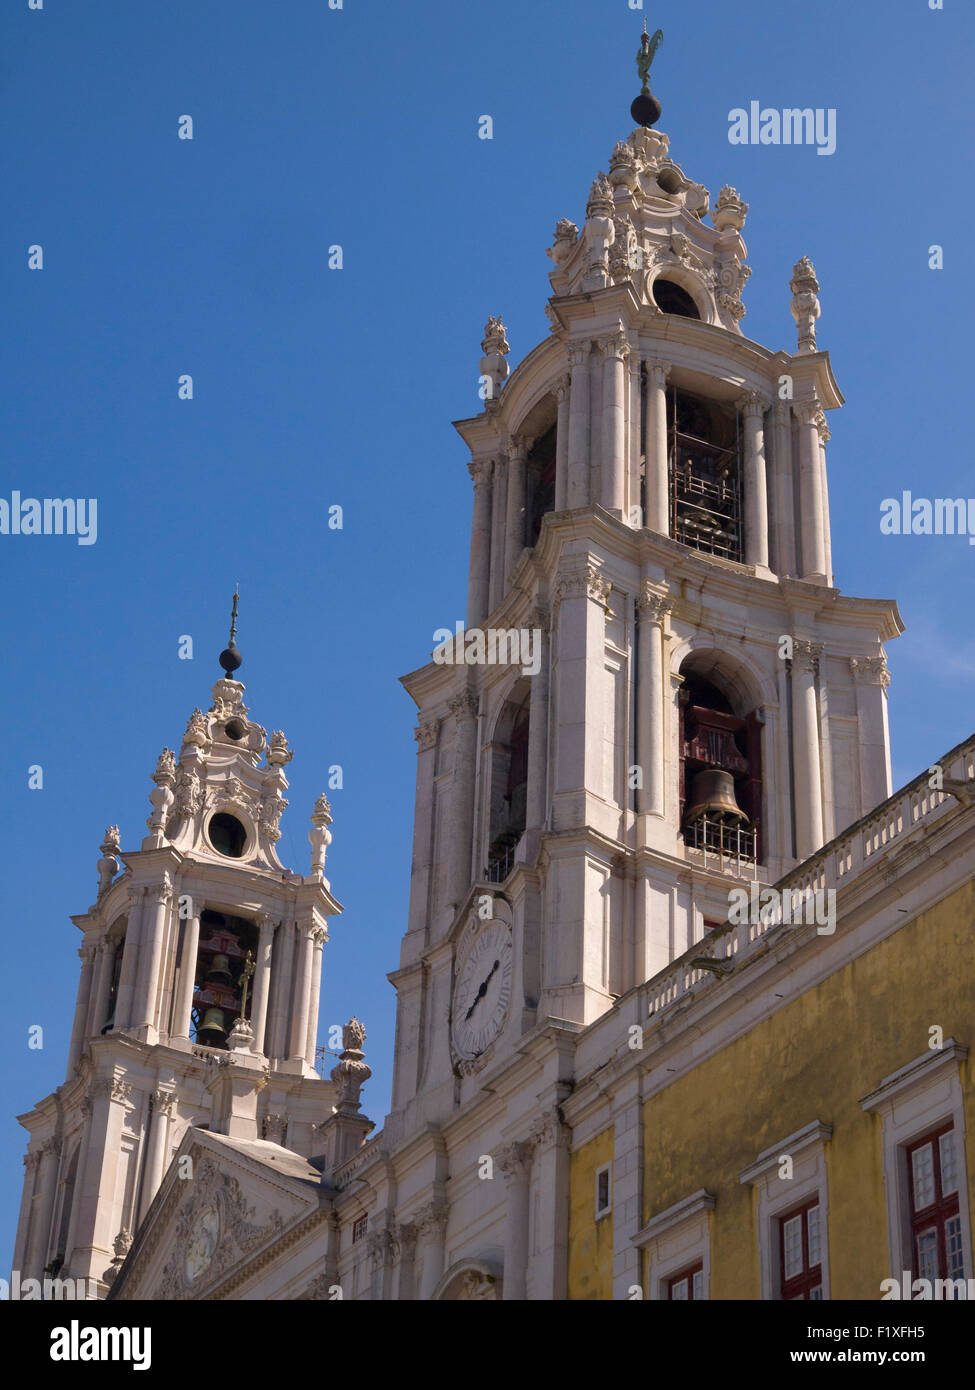 Palace of Mafra or Royal Mafra Convent, Mafra, Portugal, Europe Stock Photo